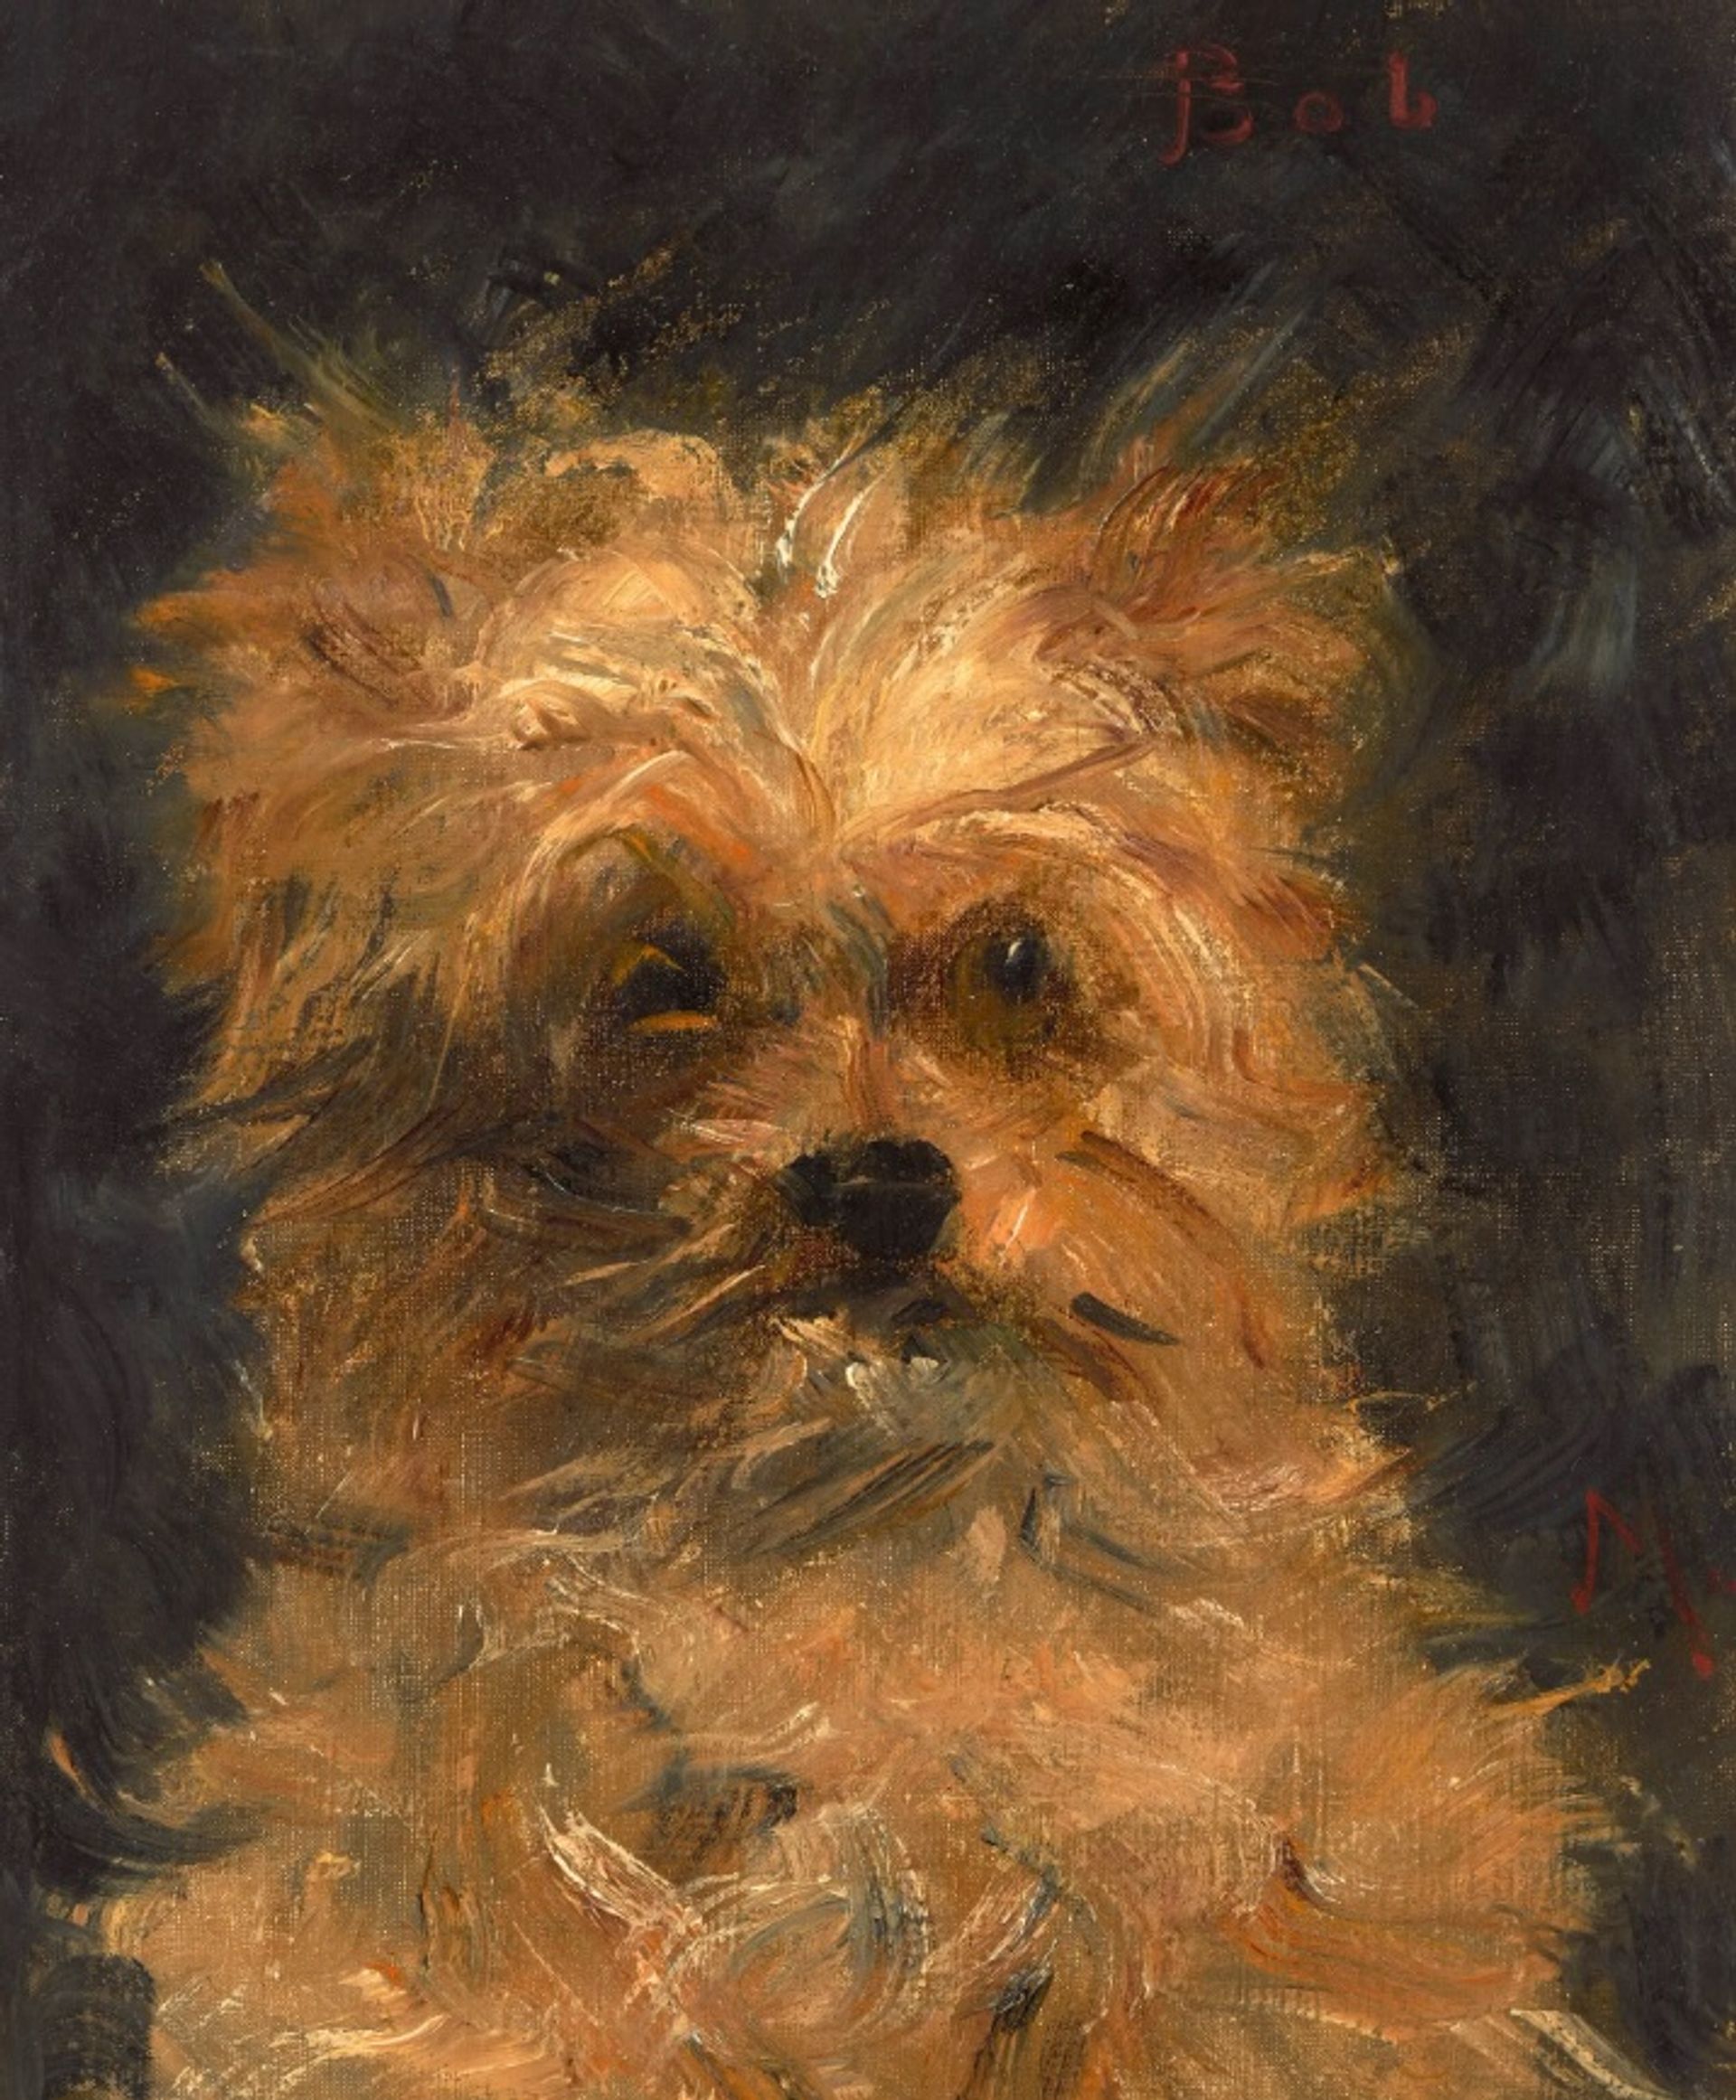 אדוארד מאנה, Tête du chien "בוב" (בסביבות 1876), מוערך $400,000-$600,000

באדיבות "כריסטי'ס"